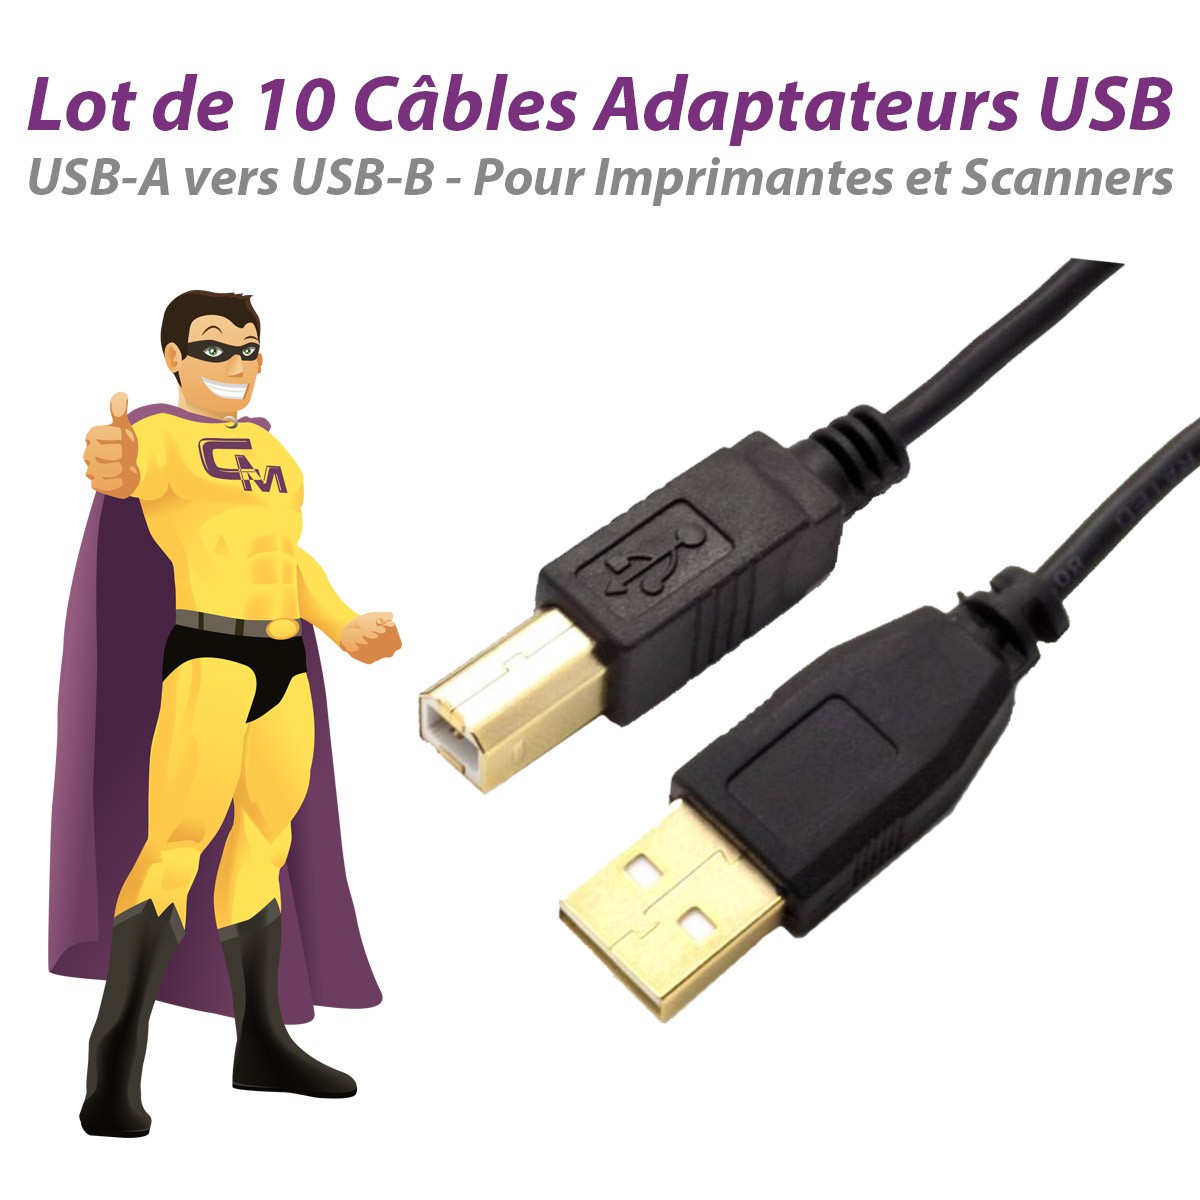 Rallonge USB 3.0 Am Bm 149795 100cm Noir NEUF - MonsieurCyberMan